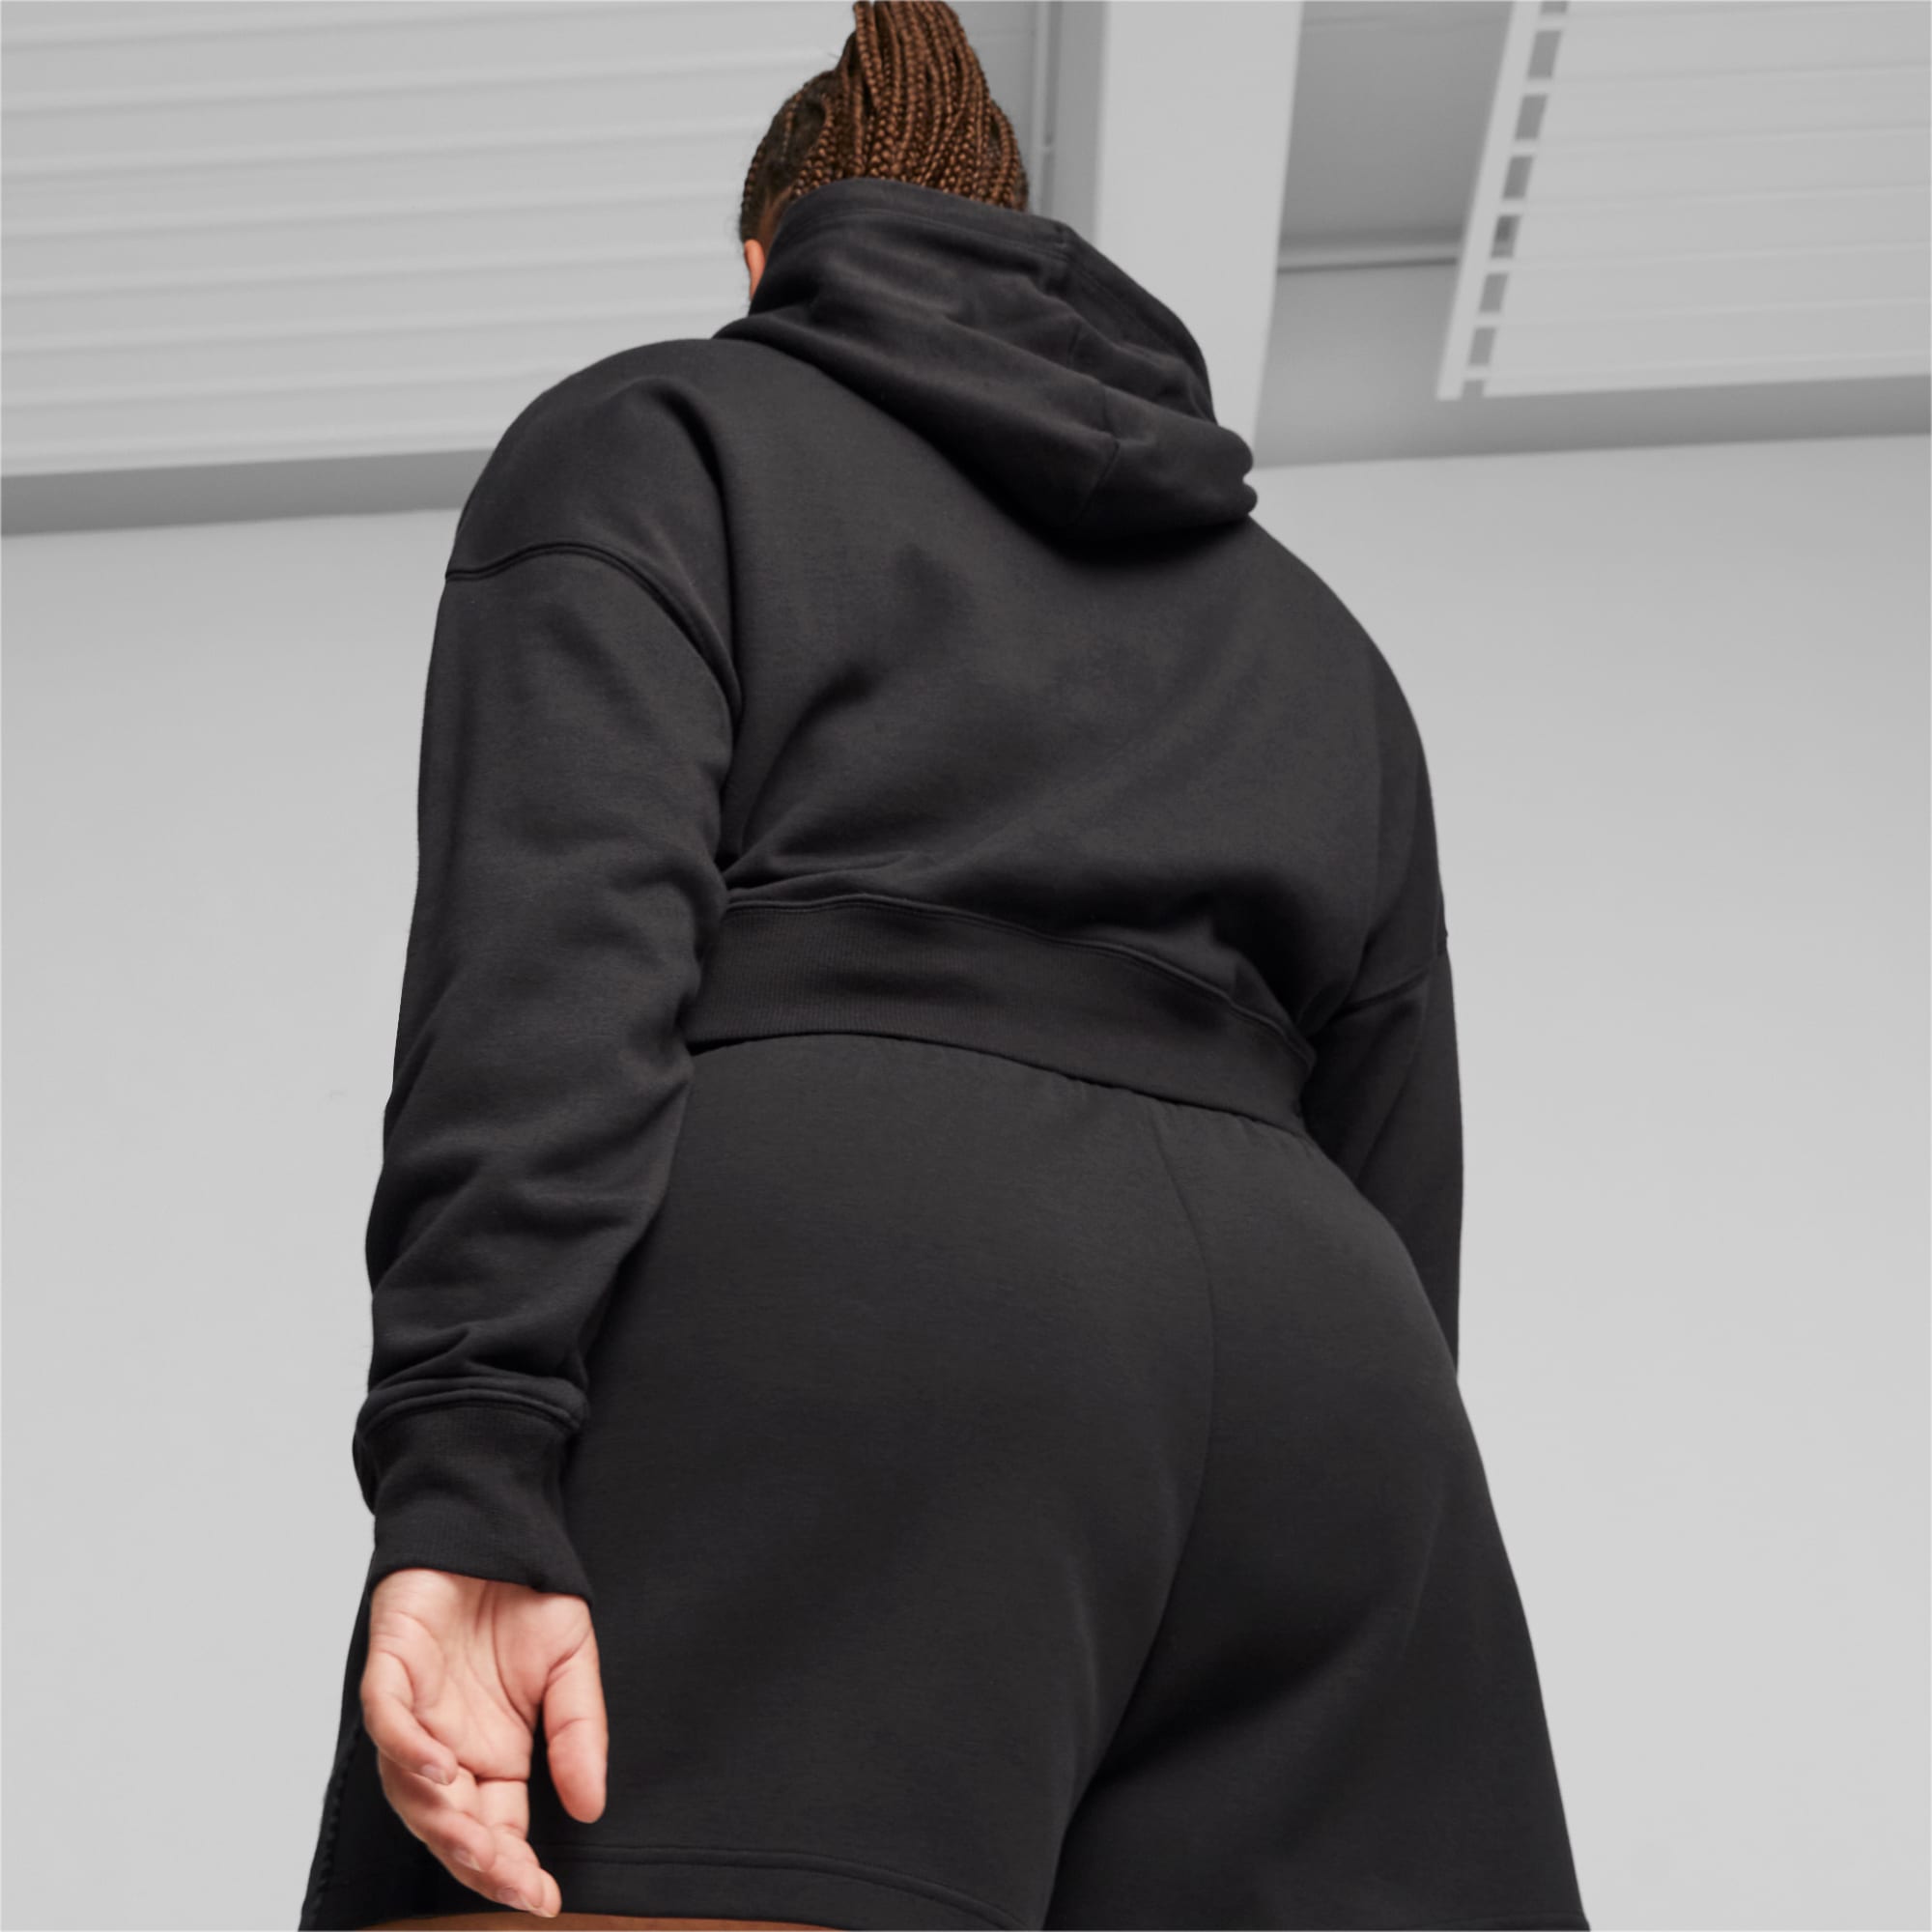 PUMA Classics Women's Cropped Hoodie, Black, Size L, Clothing